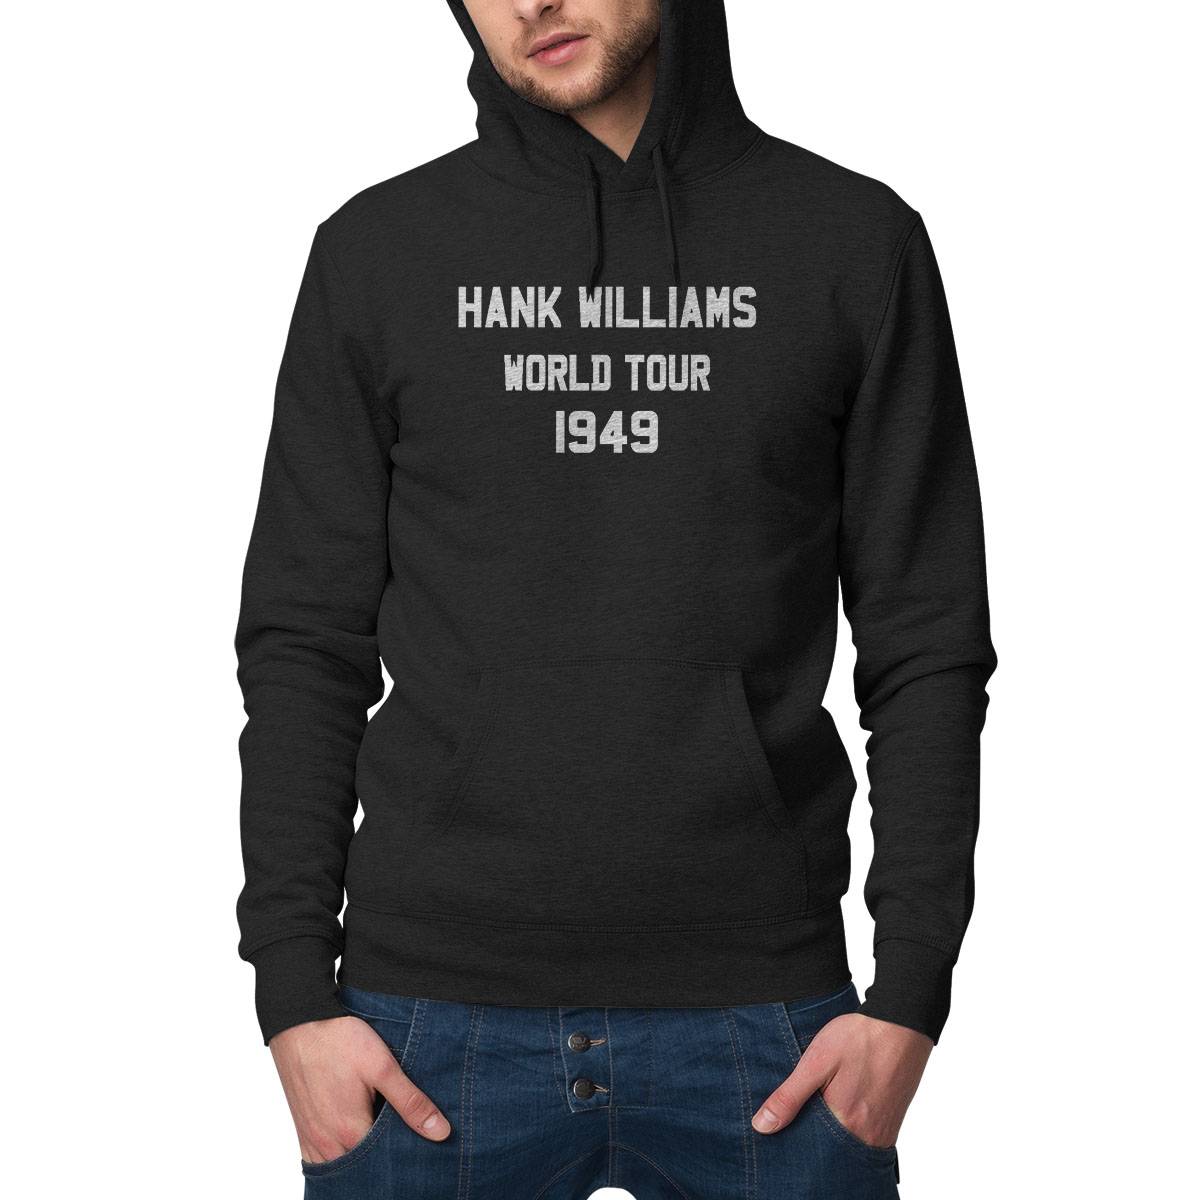 Hank Williams World Tour